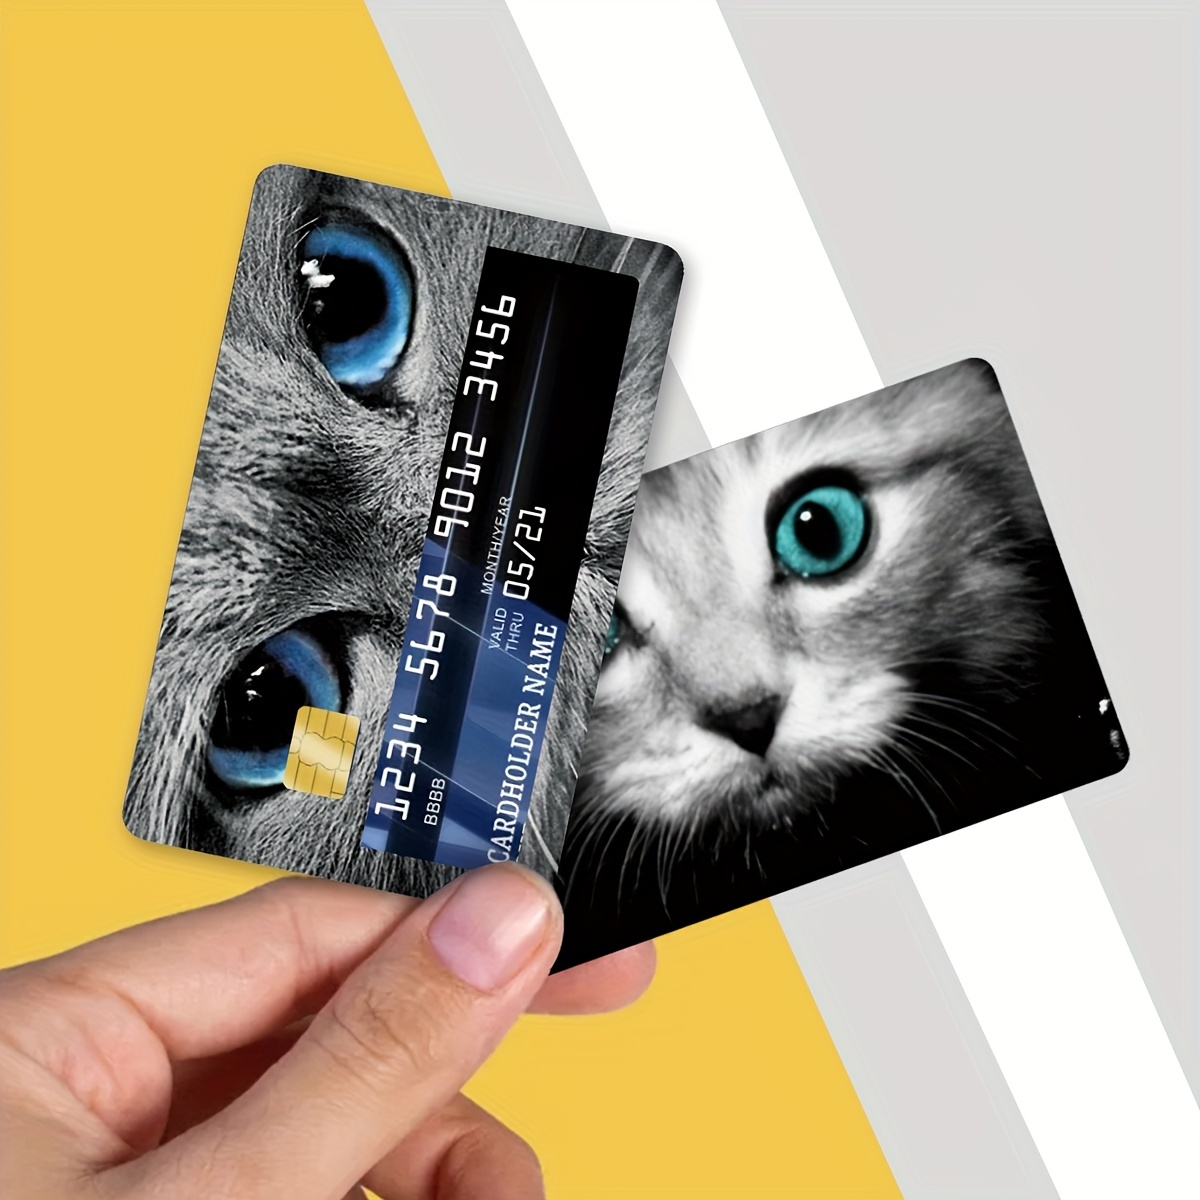 4pcs Anime Card Stickers Personalizing Key Card,Debit Card, Credit